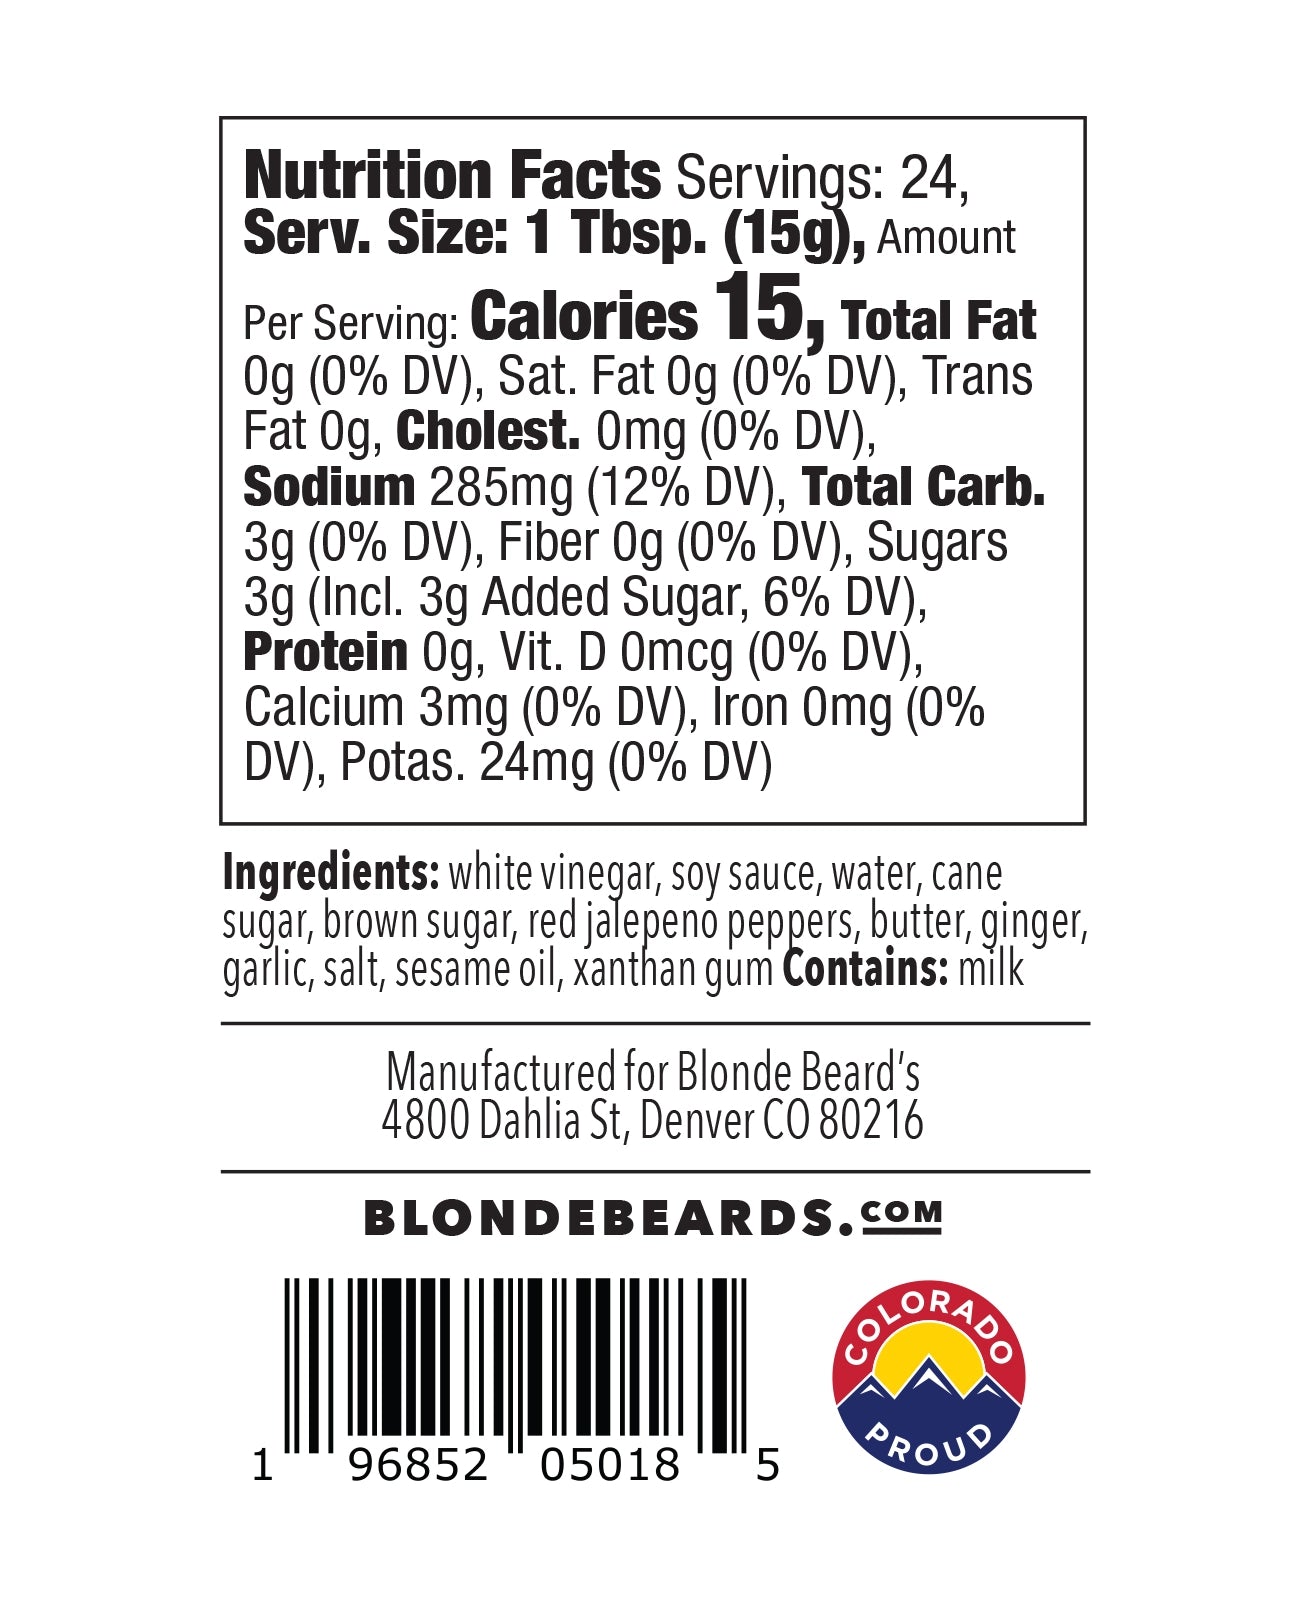 Fifteen (15) calories per serving of Blonde Beard's Dojo sauce.